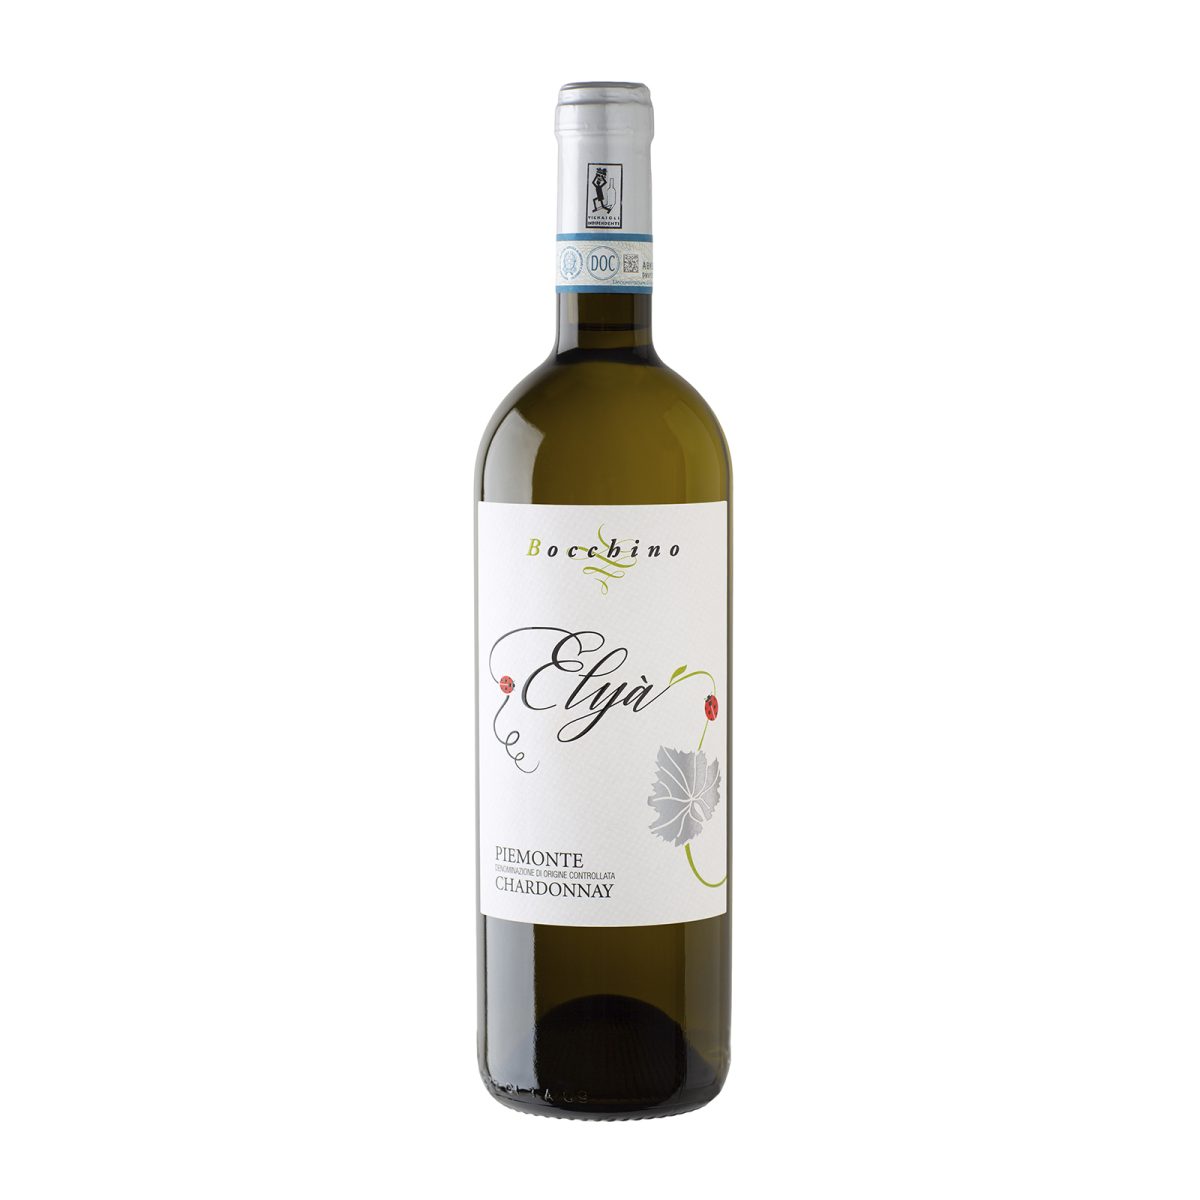 Beppe Bocchino winery Elyà DOC Piemonte Chardonnay